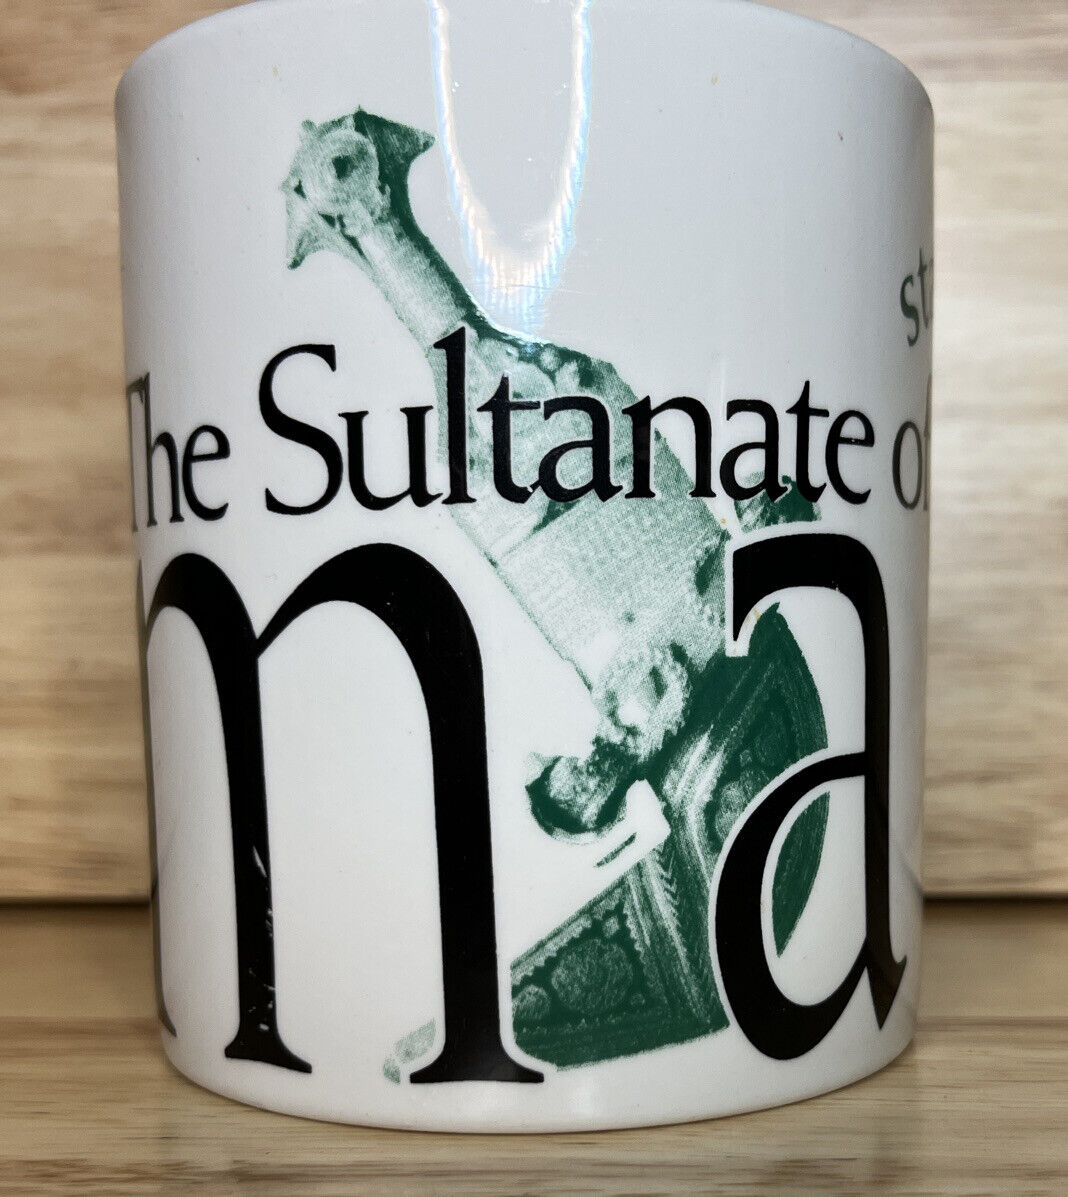 Starbucks The Sultanate of OMAN City Mug 16 oz Cup Collectors Series 